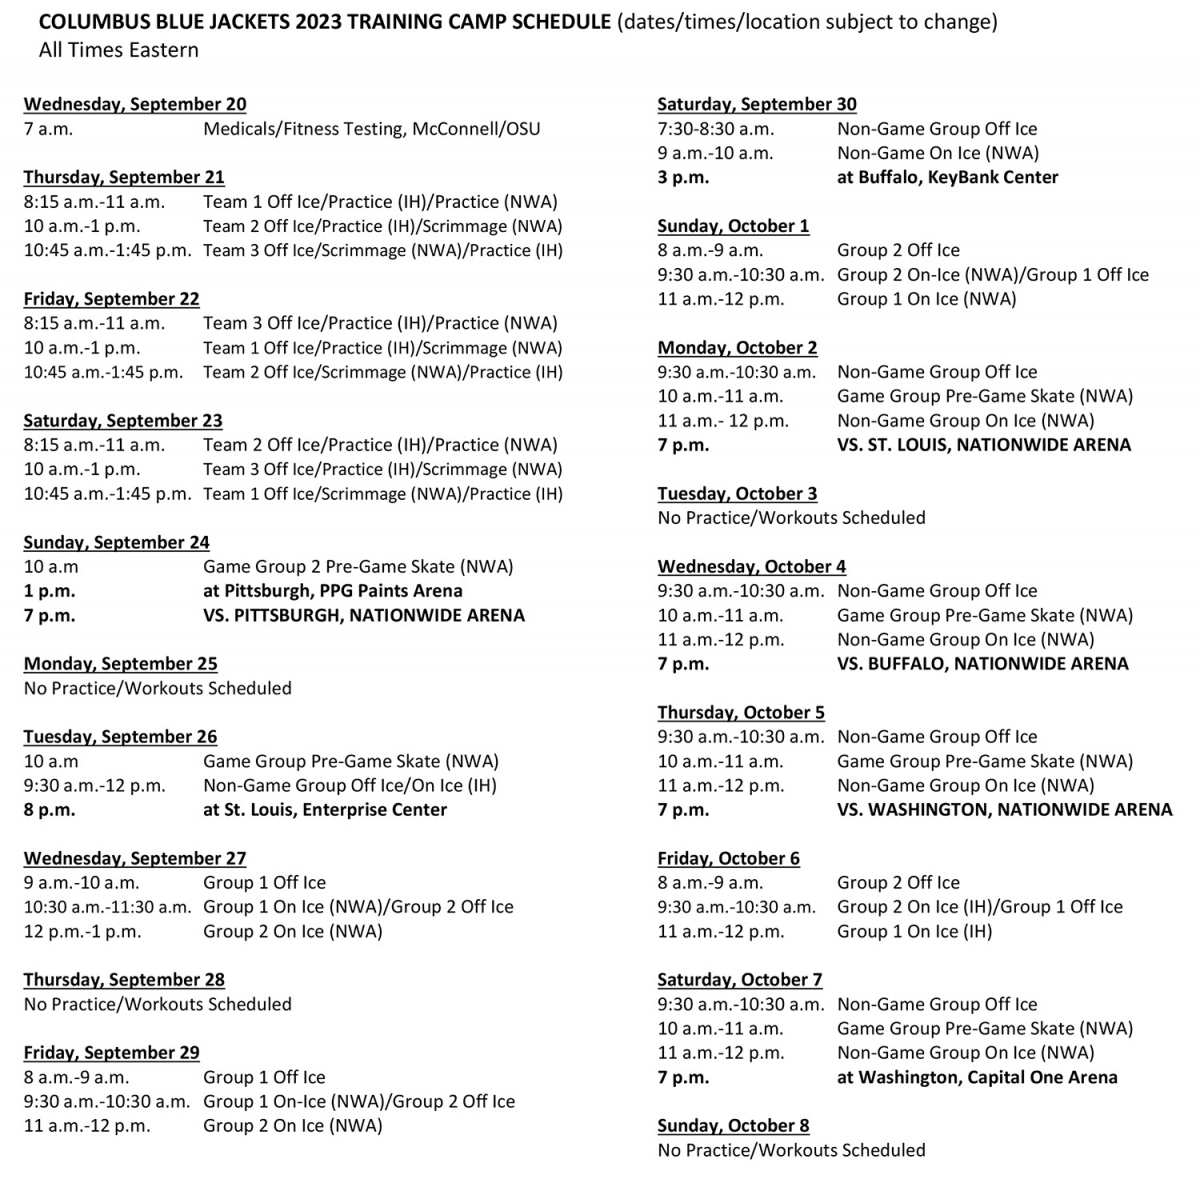 Blue Jackets 2023 training camp schedule